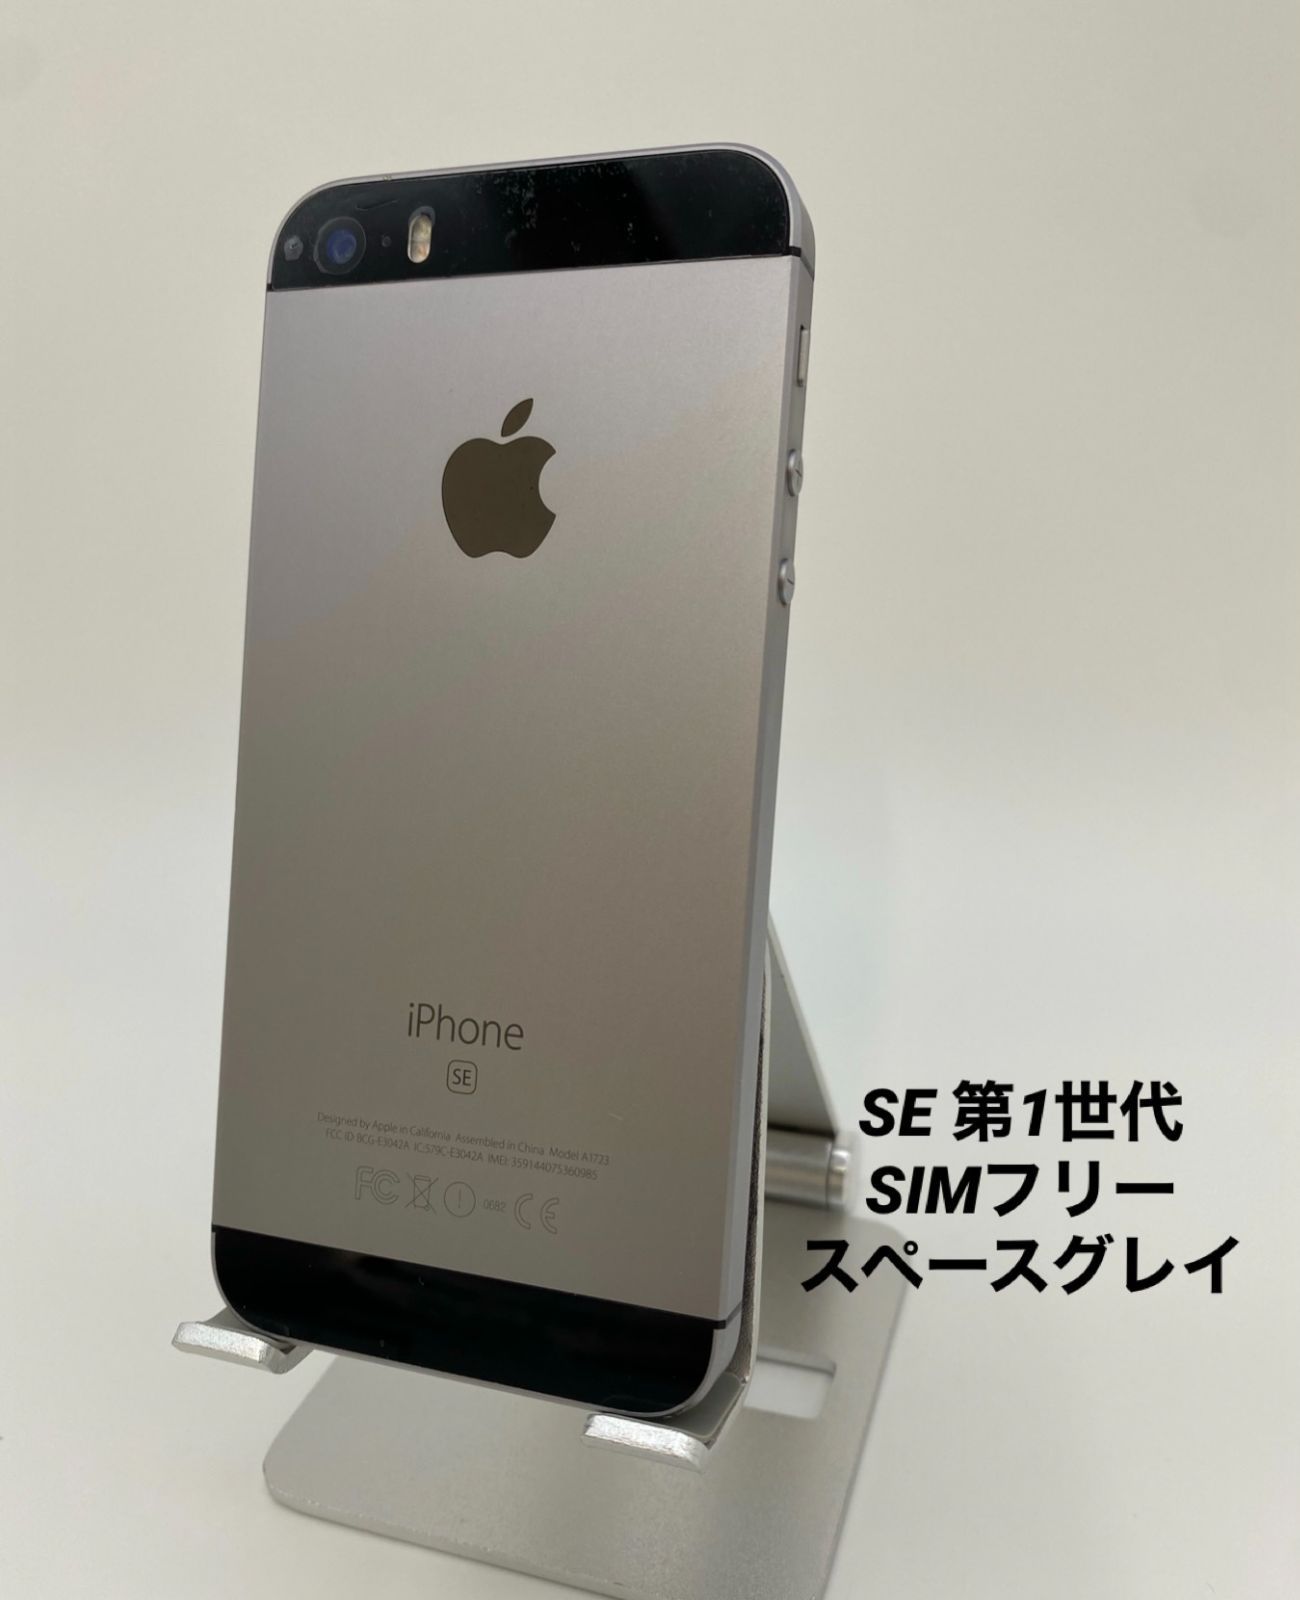 iPhone SE スペースグレー 32GB - スマートフォン本体